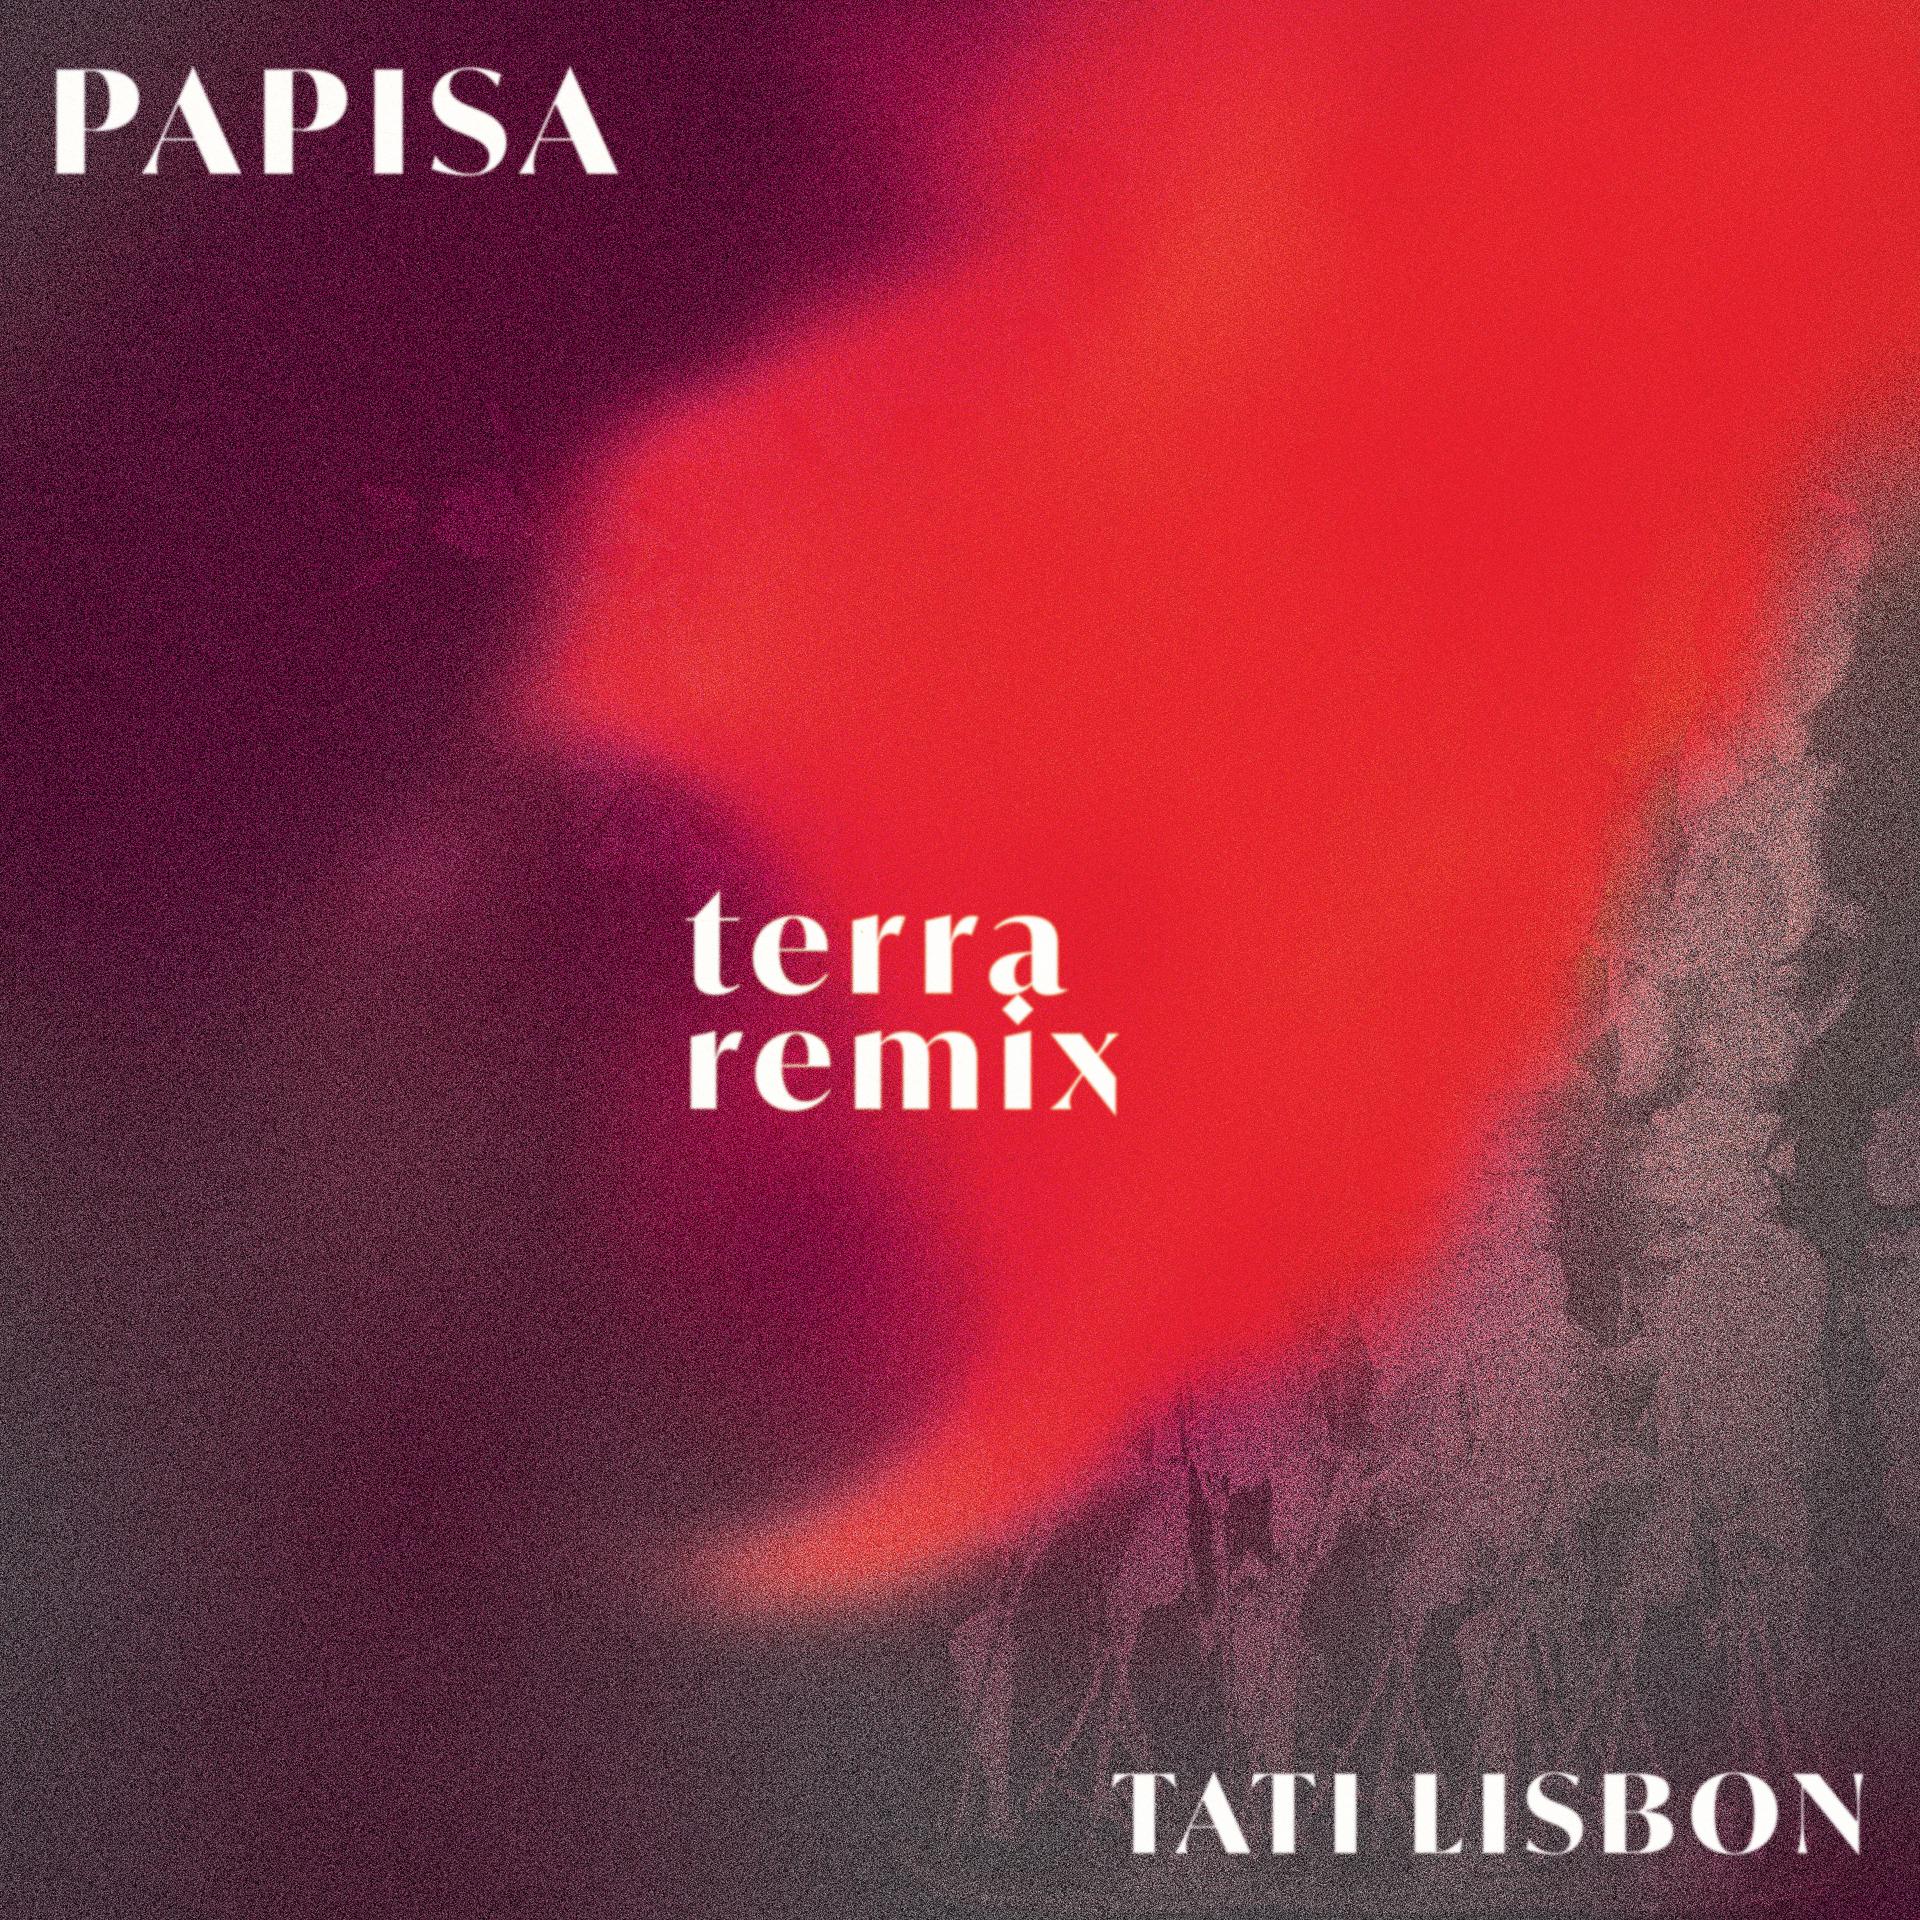 Постер к треку Papisa, Tati Lisbon - Terra (Remix)